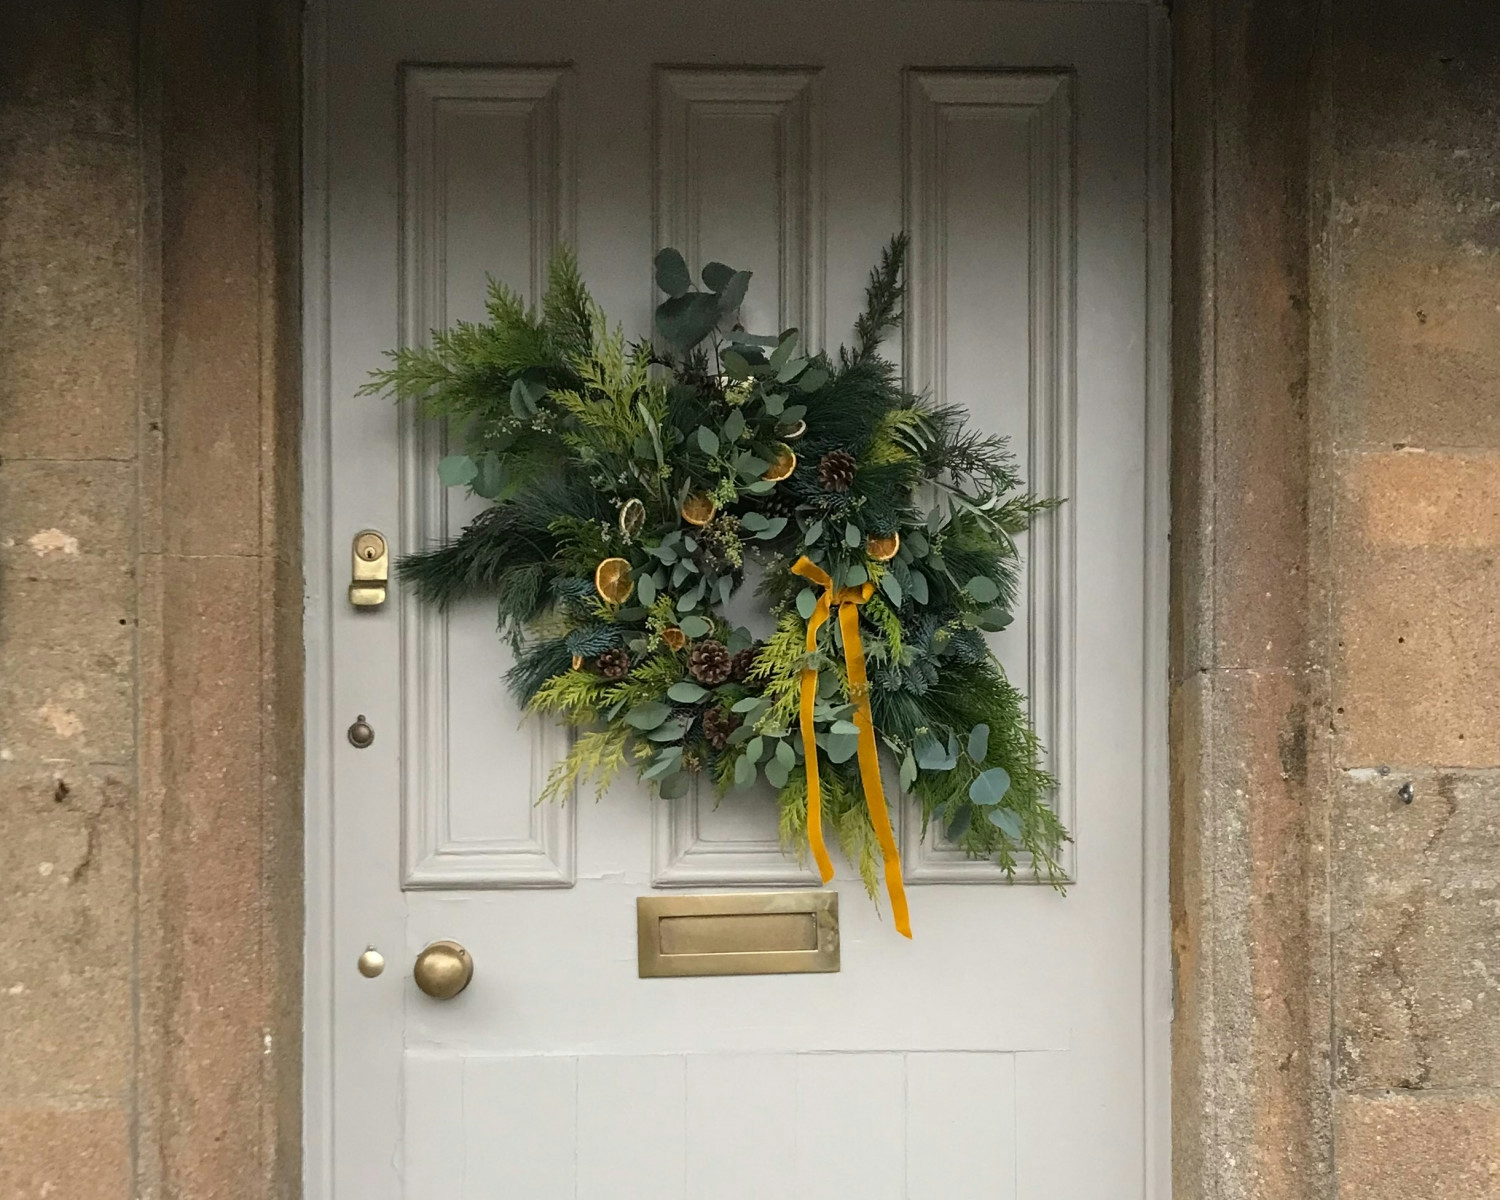 Christmas Wreath Workshop at The Bath Arms